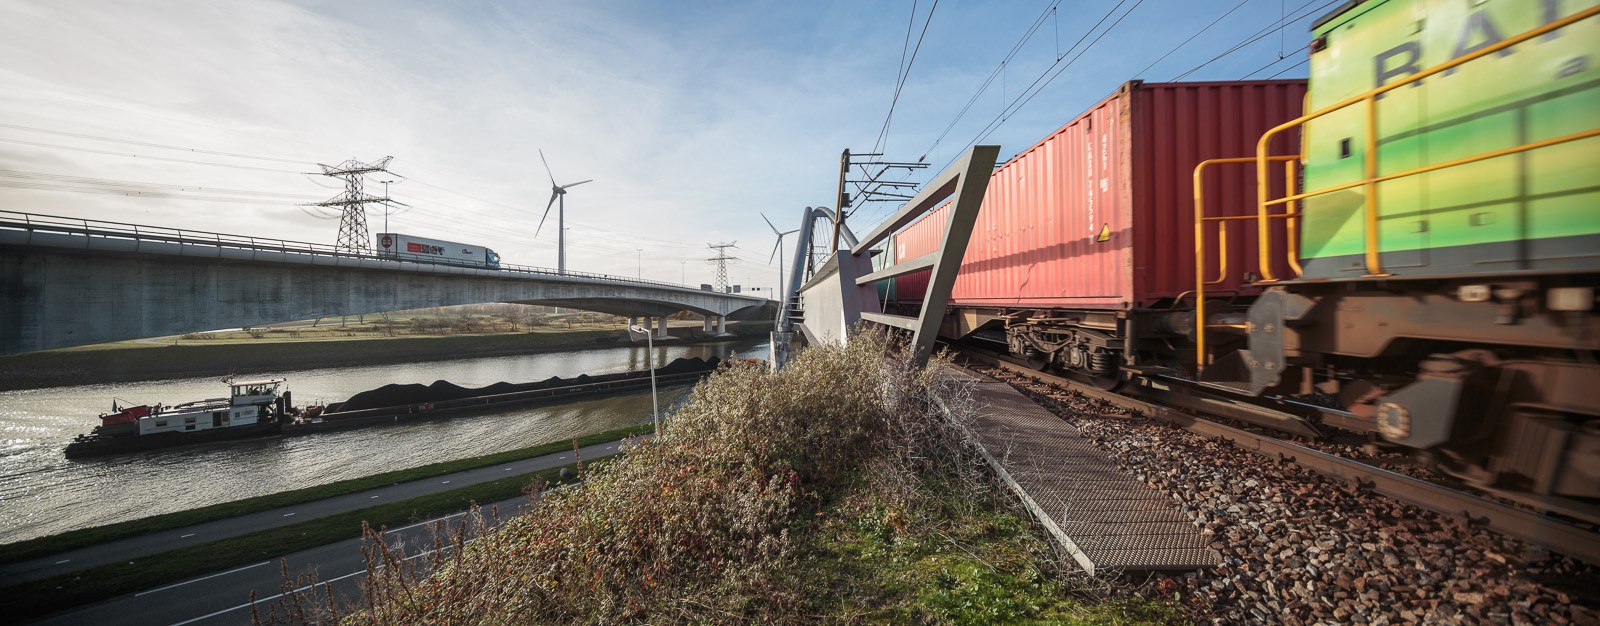 Dintelhavenbridge-Rotterdam-modalities2-wm